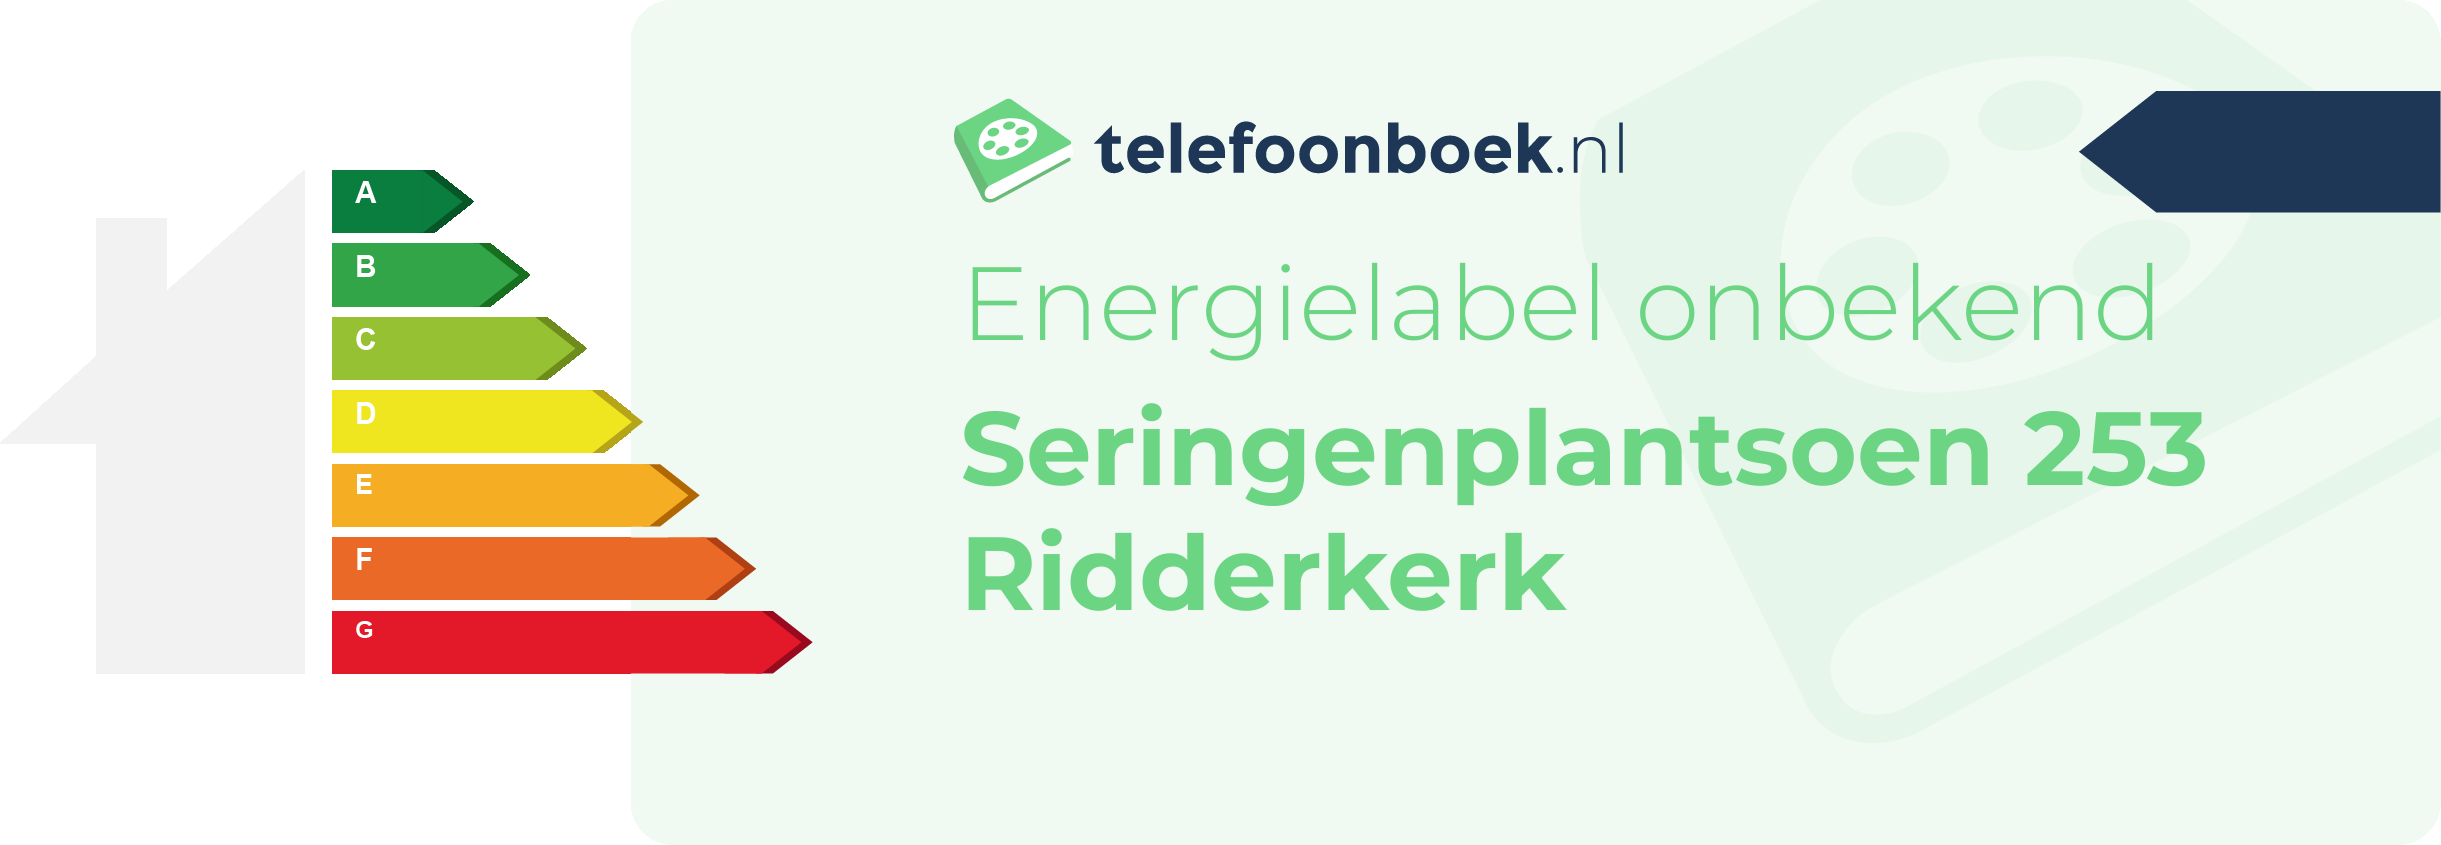 Energielabel Seringenplantsoen 253 Ridderkerk